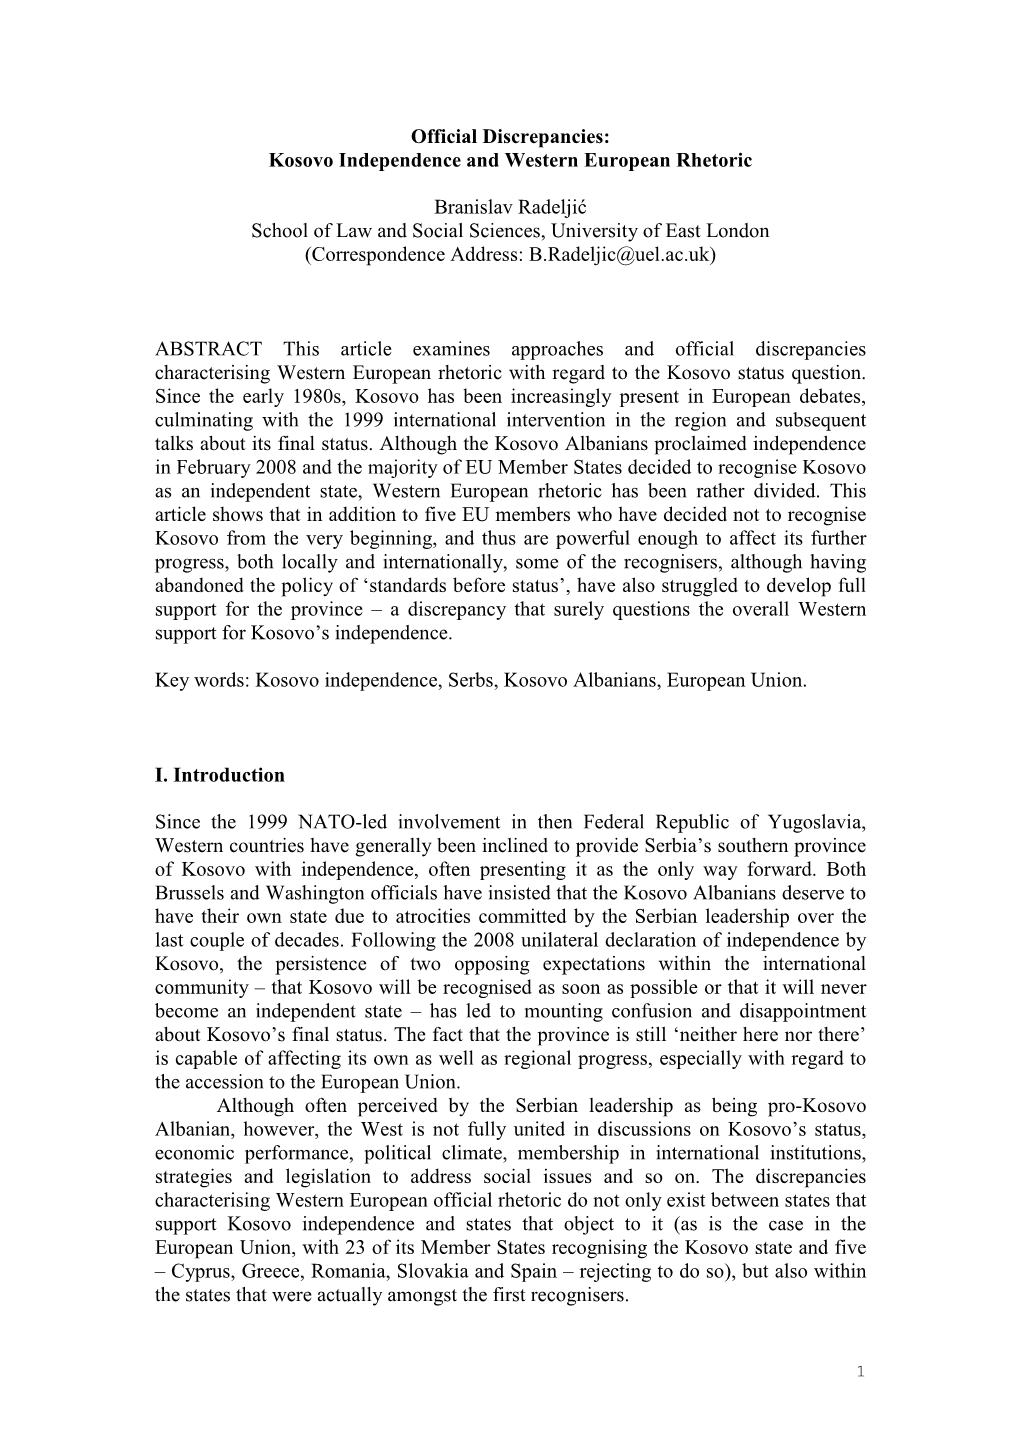 Radeljic, PEPS Article (Copy-Edited Version).Pdf